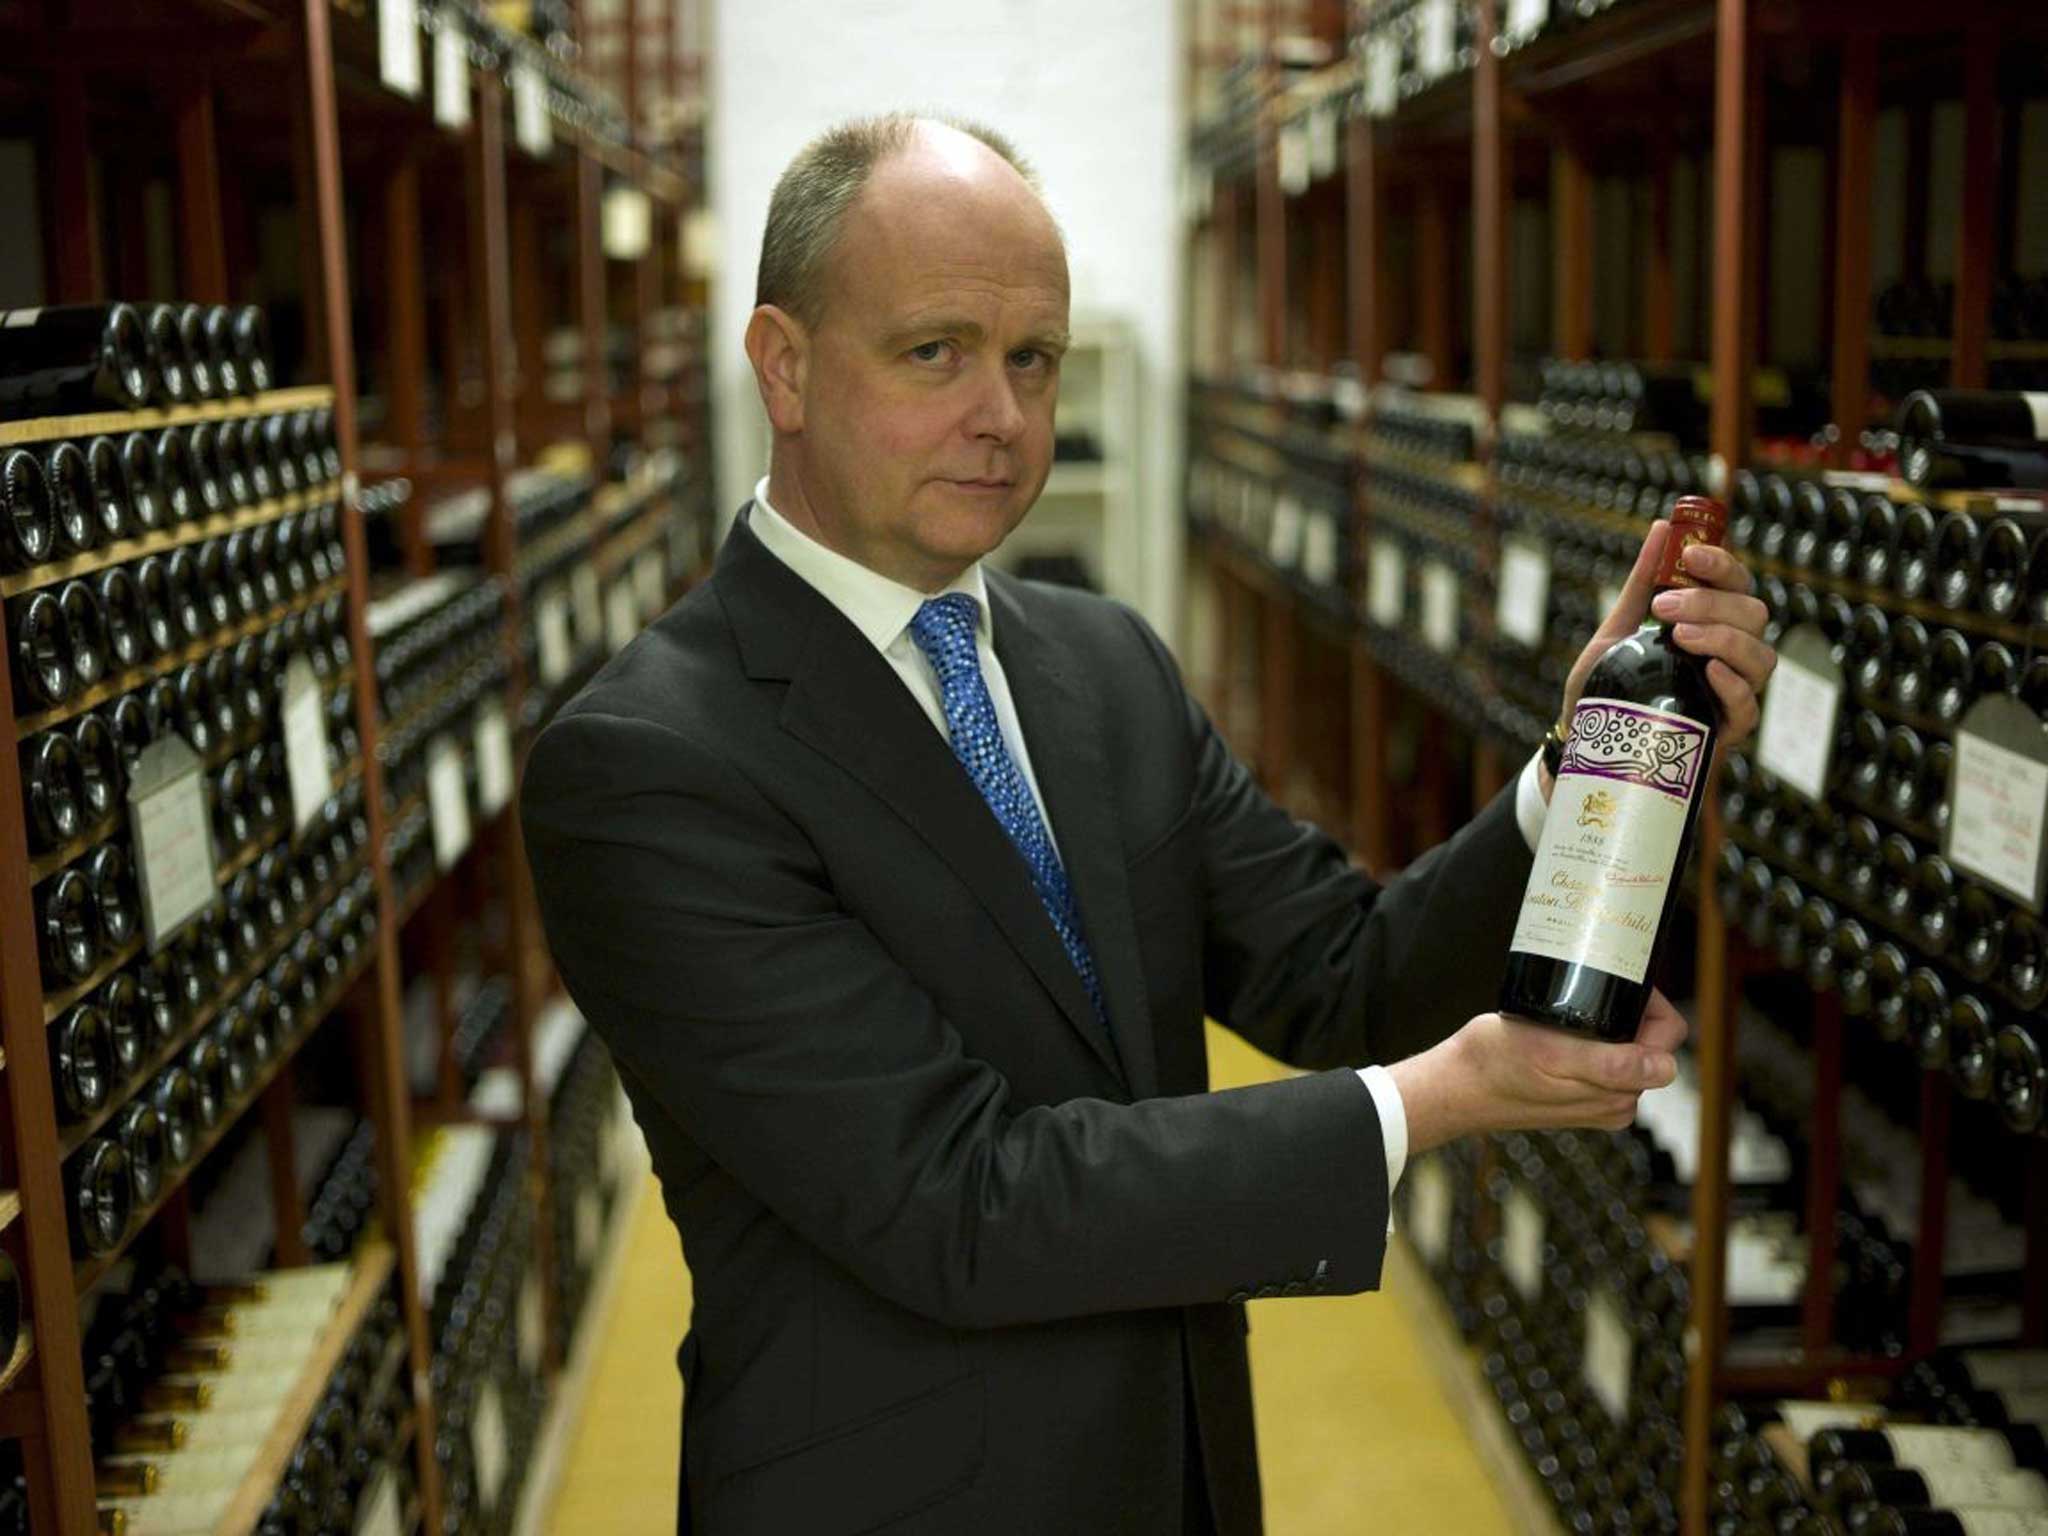 Bottle bank: Robert Alexander, head of government hospitality